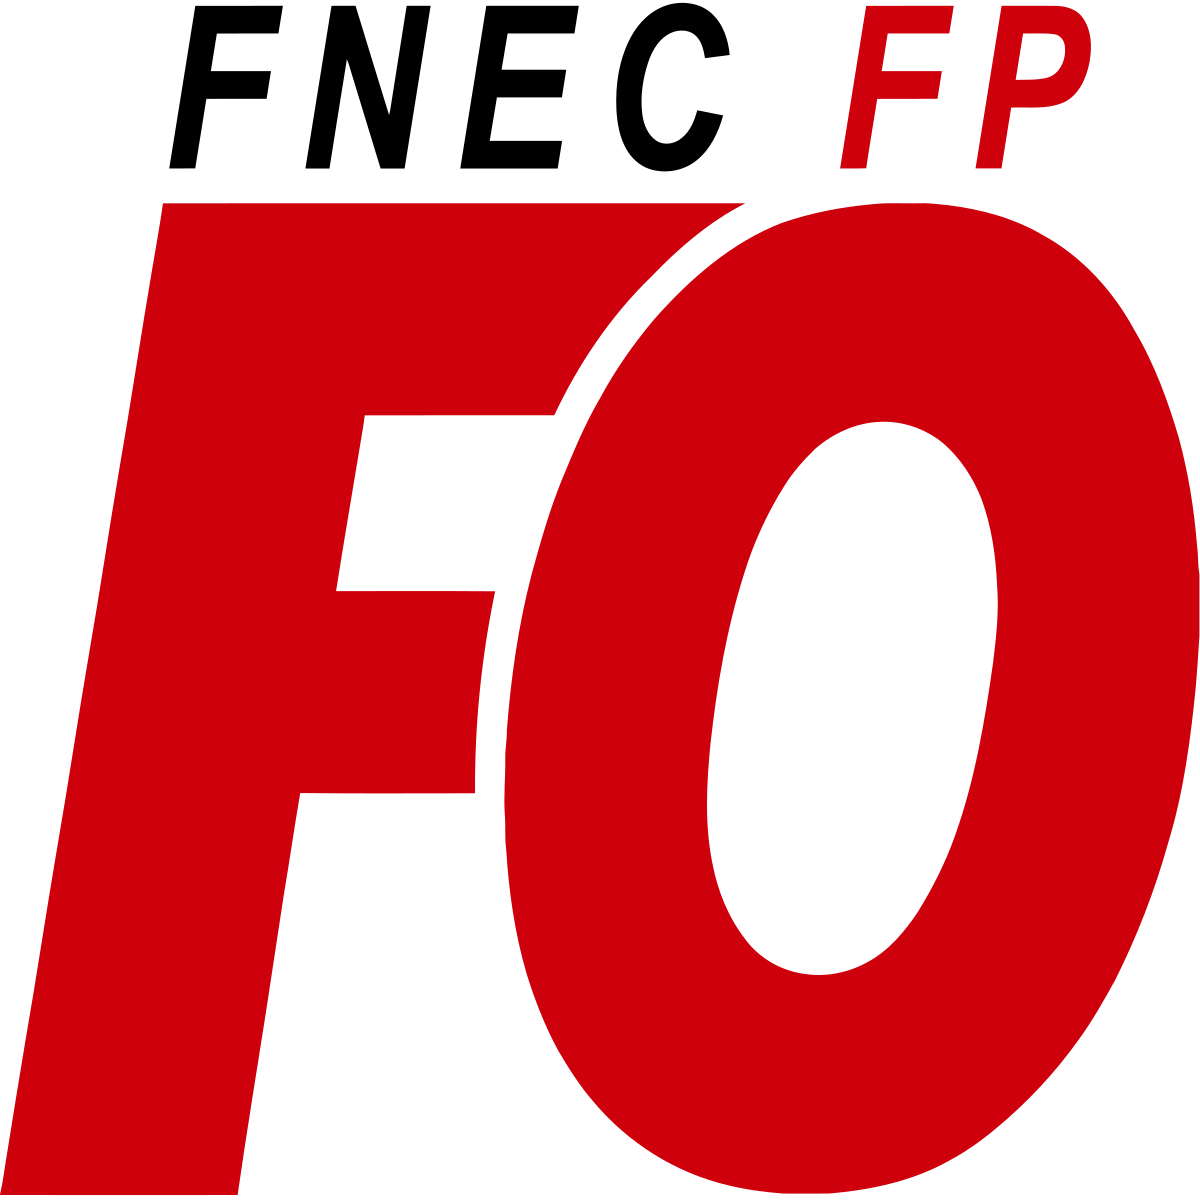 fnecfpfo.logo.vectoriel.svg.png